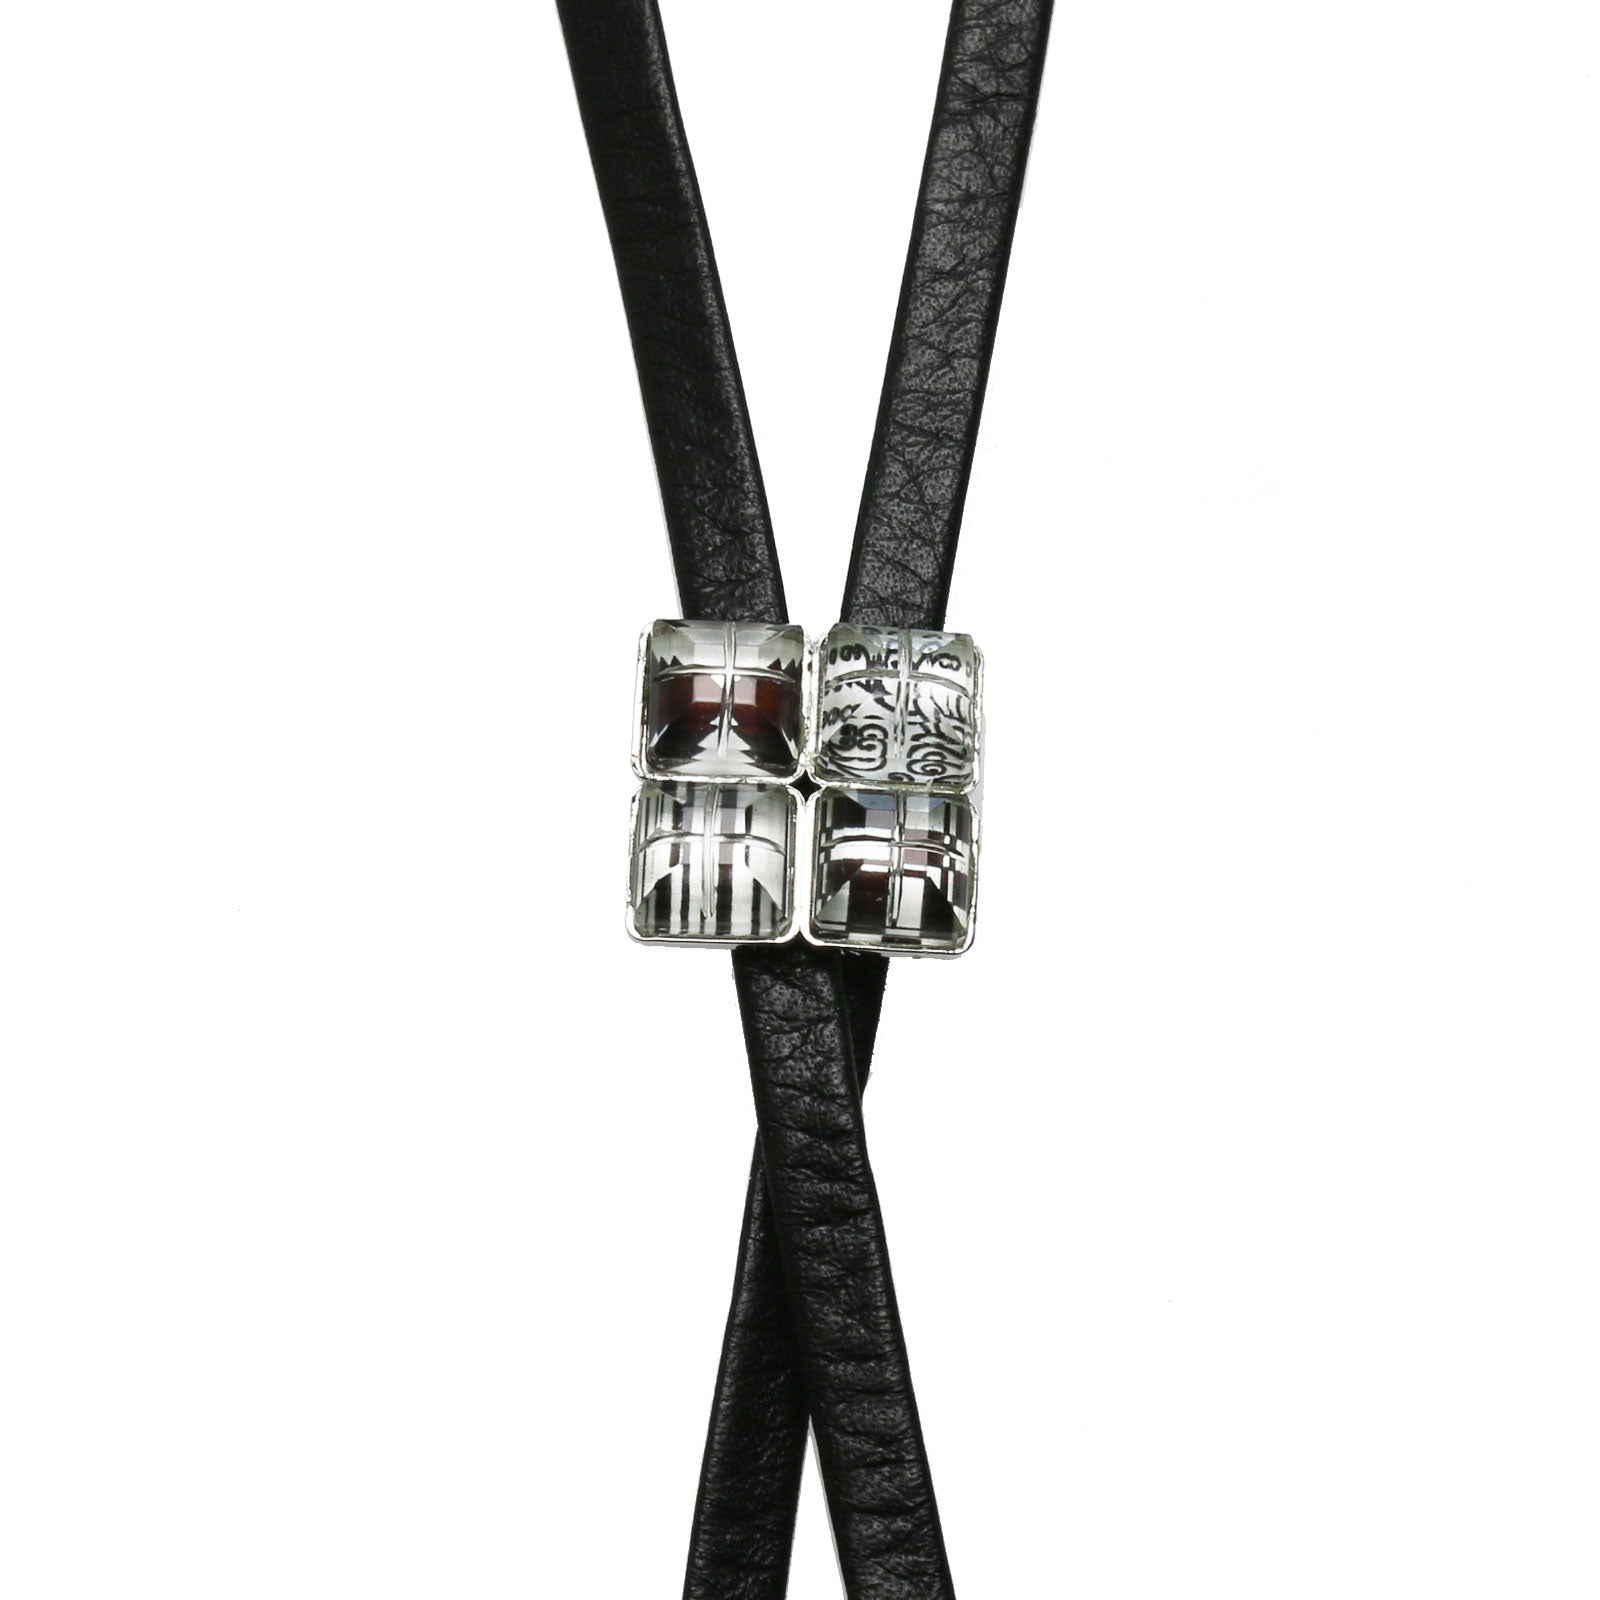 Leather Straps Bolo Tie Black-And-White Onyx TAMARUSAN